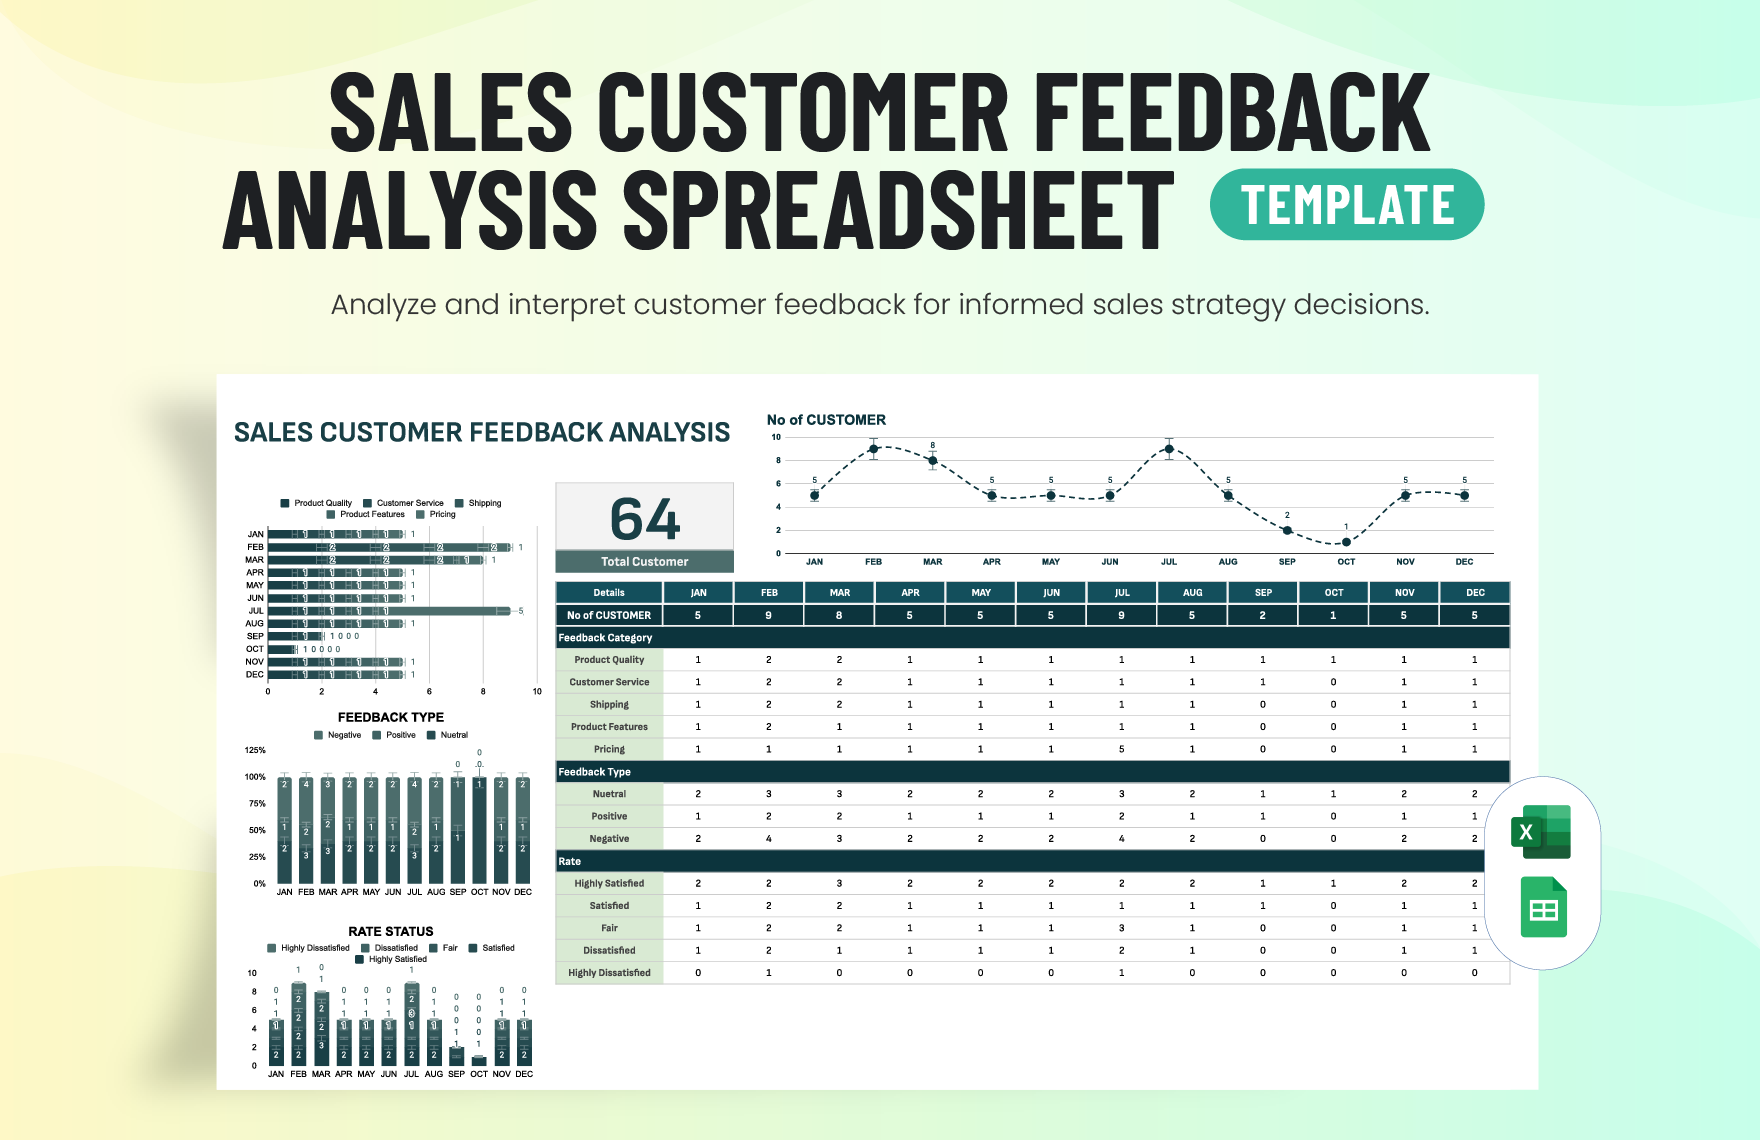 Sales Customer Feedback Analysis Spreadsheet Template in Excel, Google Sheets